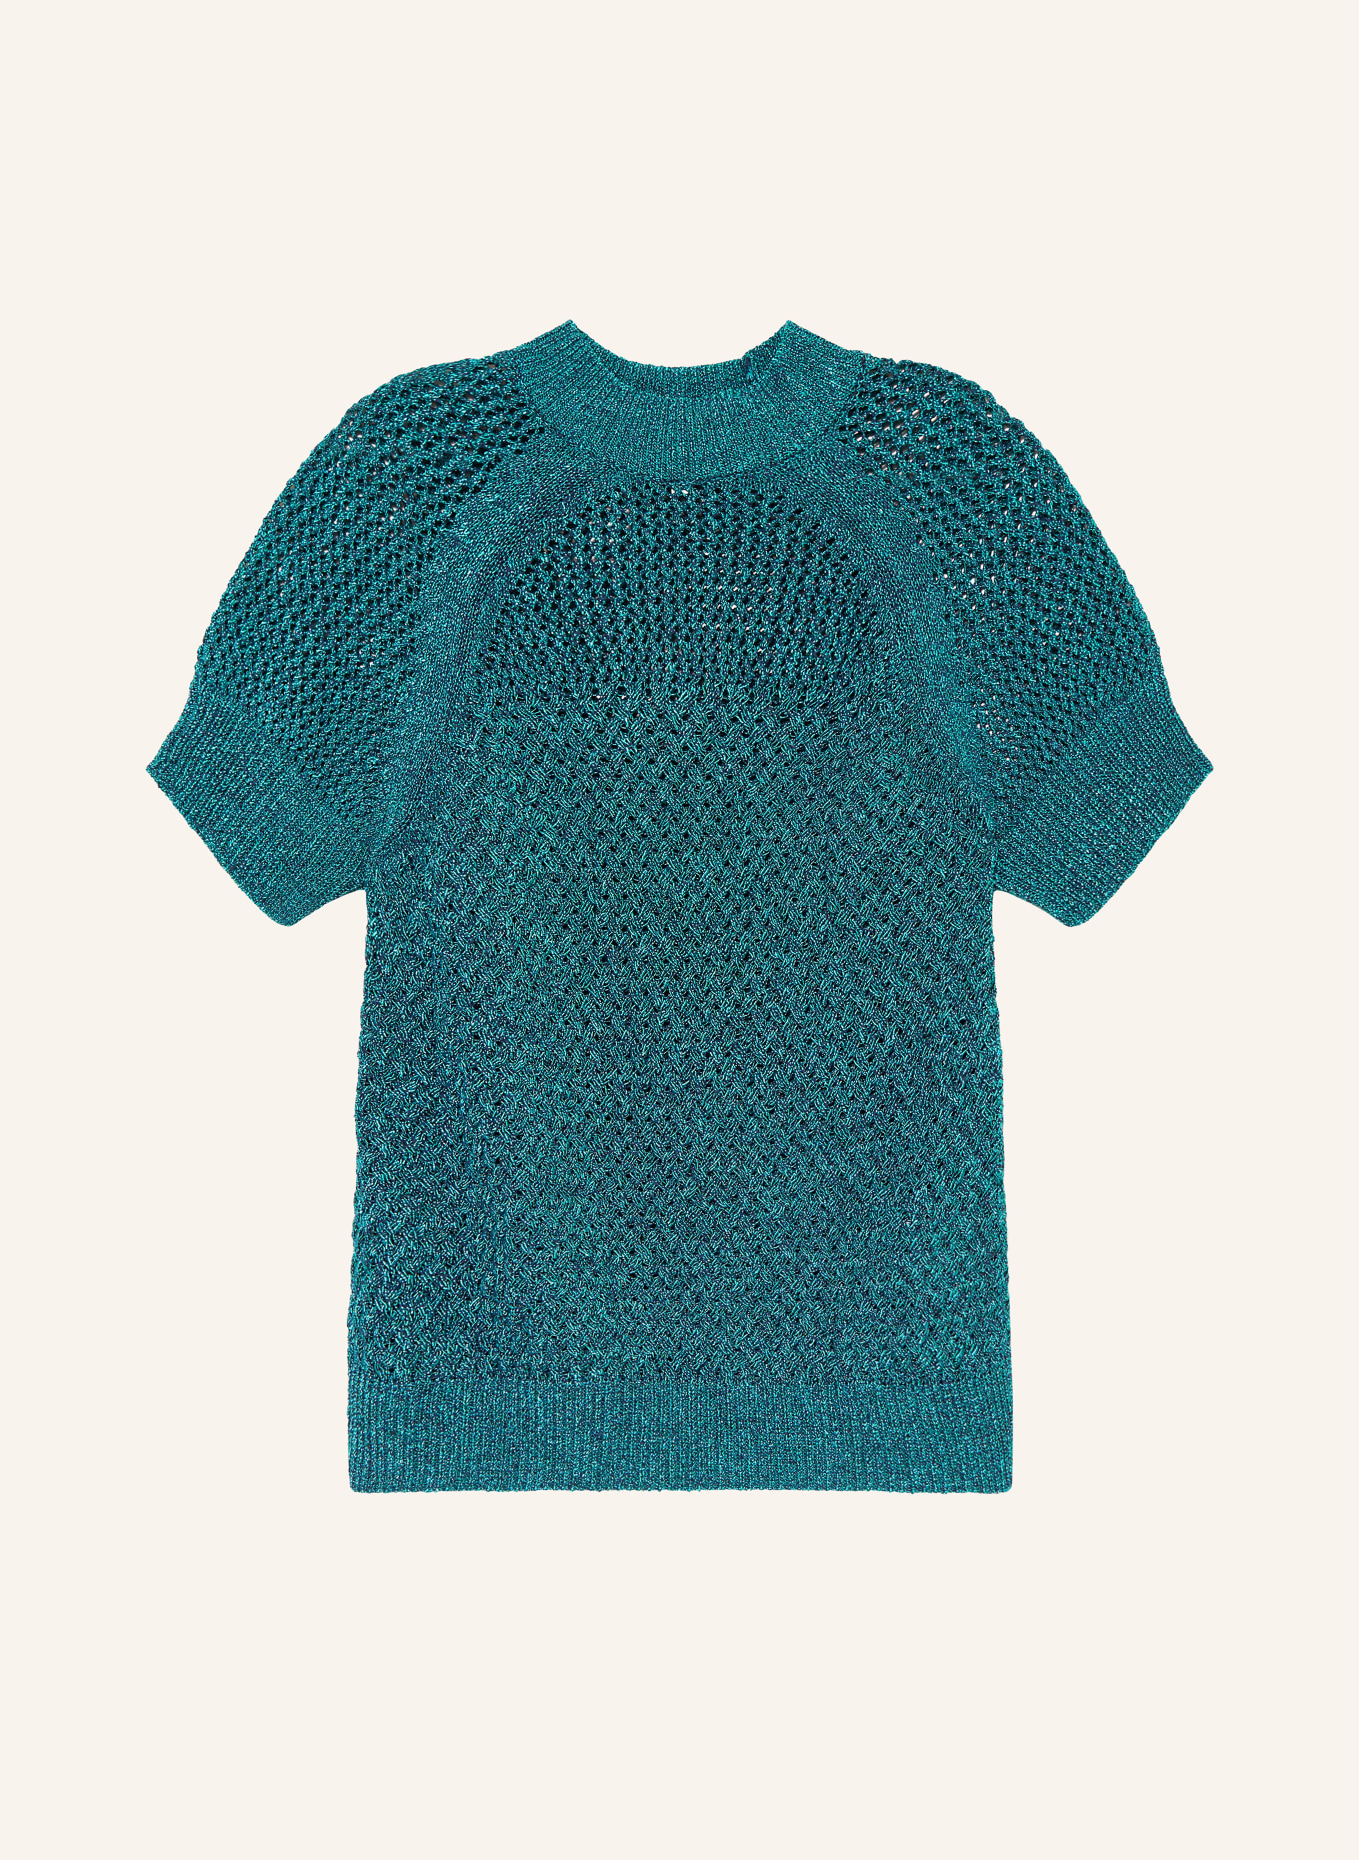 TED BAKER Strickshirt MATILDR, Farbe: PETROL (Bild 1)